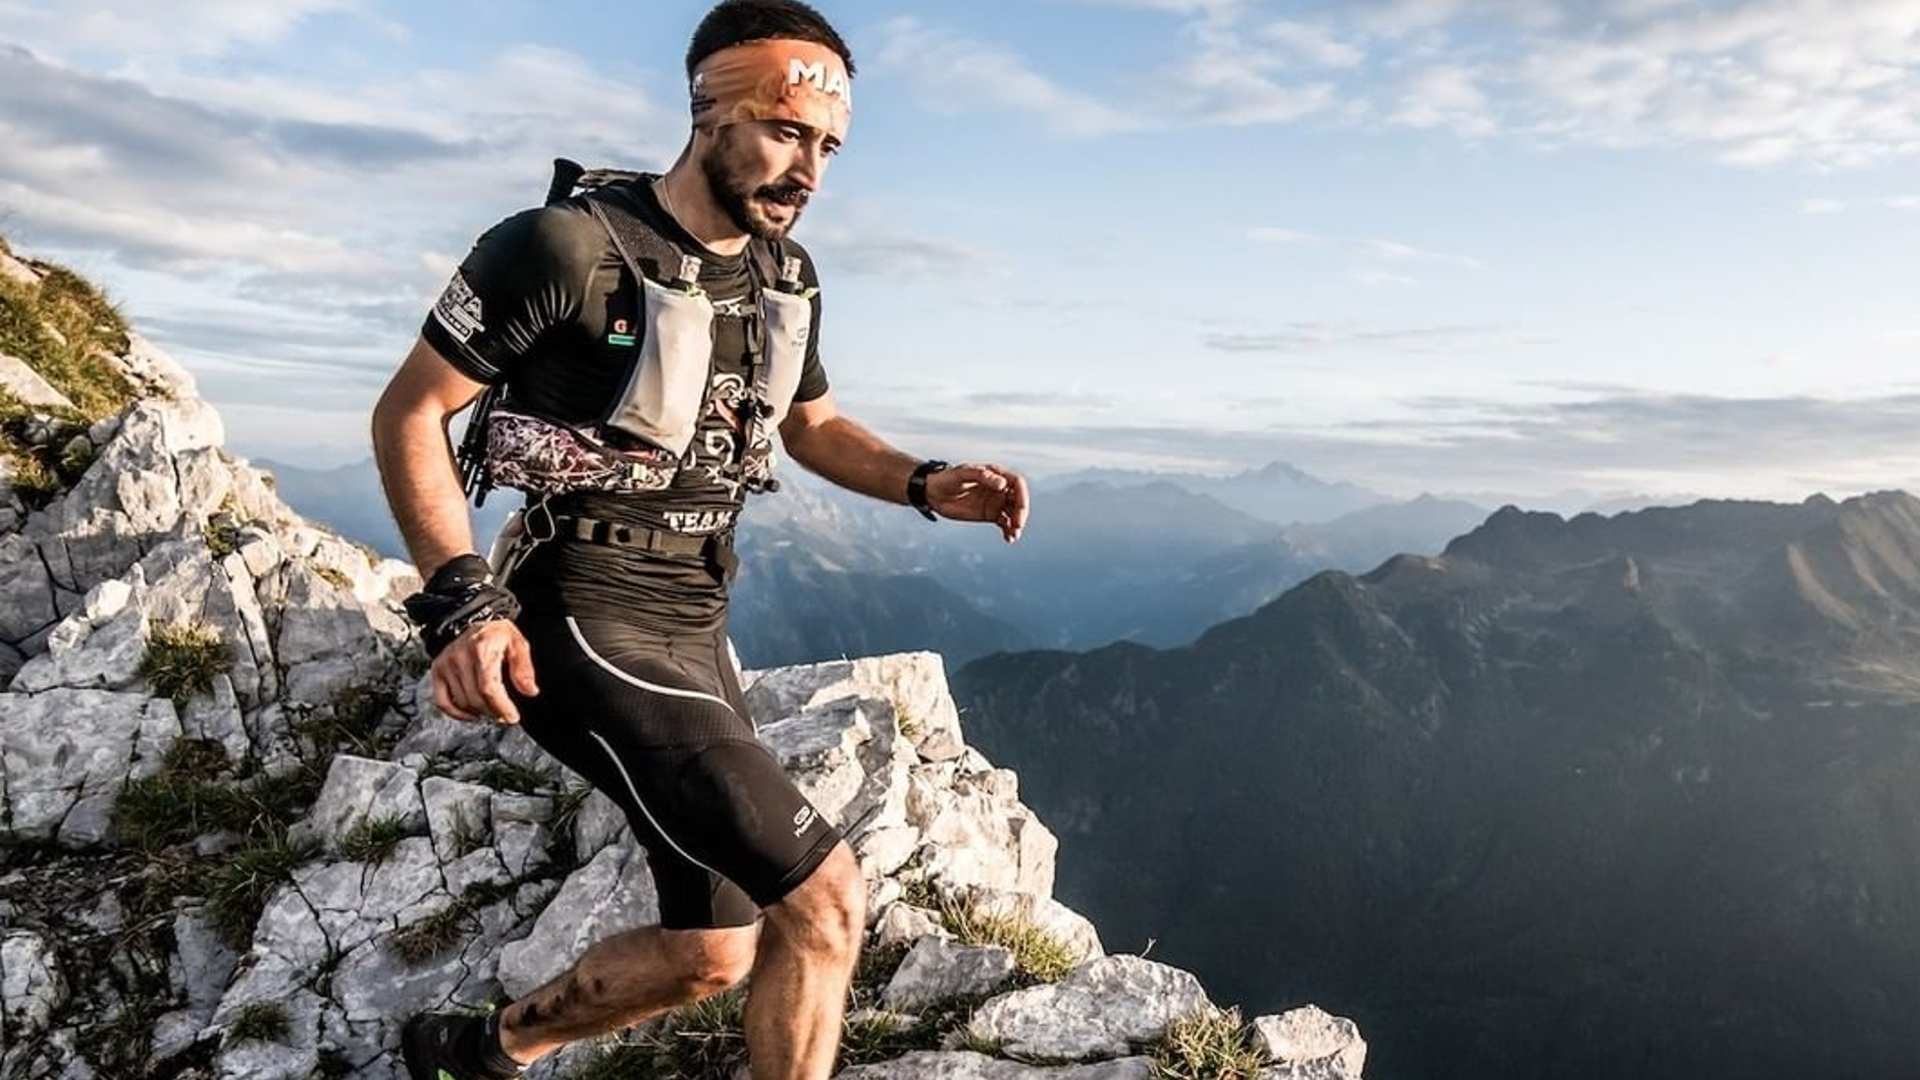 A Skyrunner on the Italian mountains (Credits- Skyrunning Federation/Instagram)